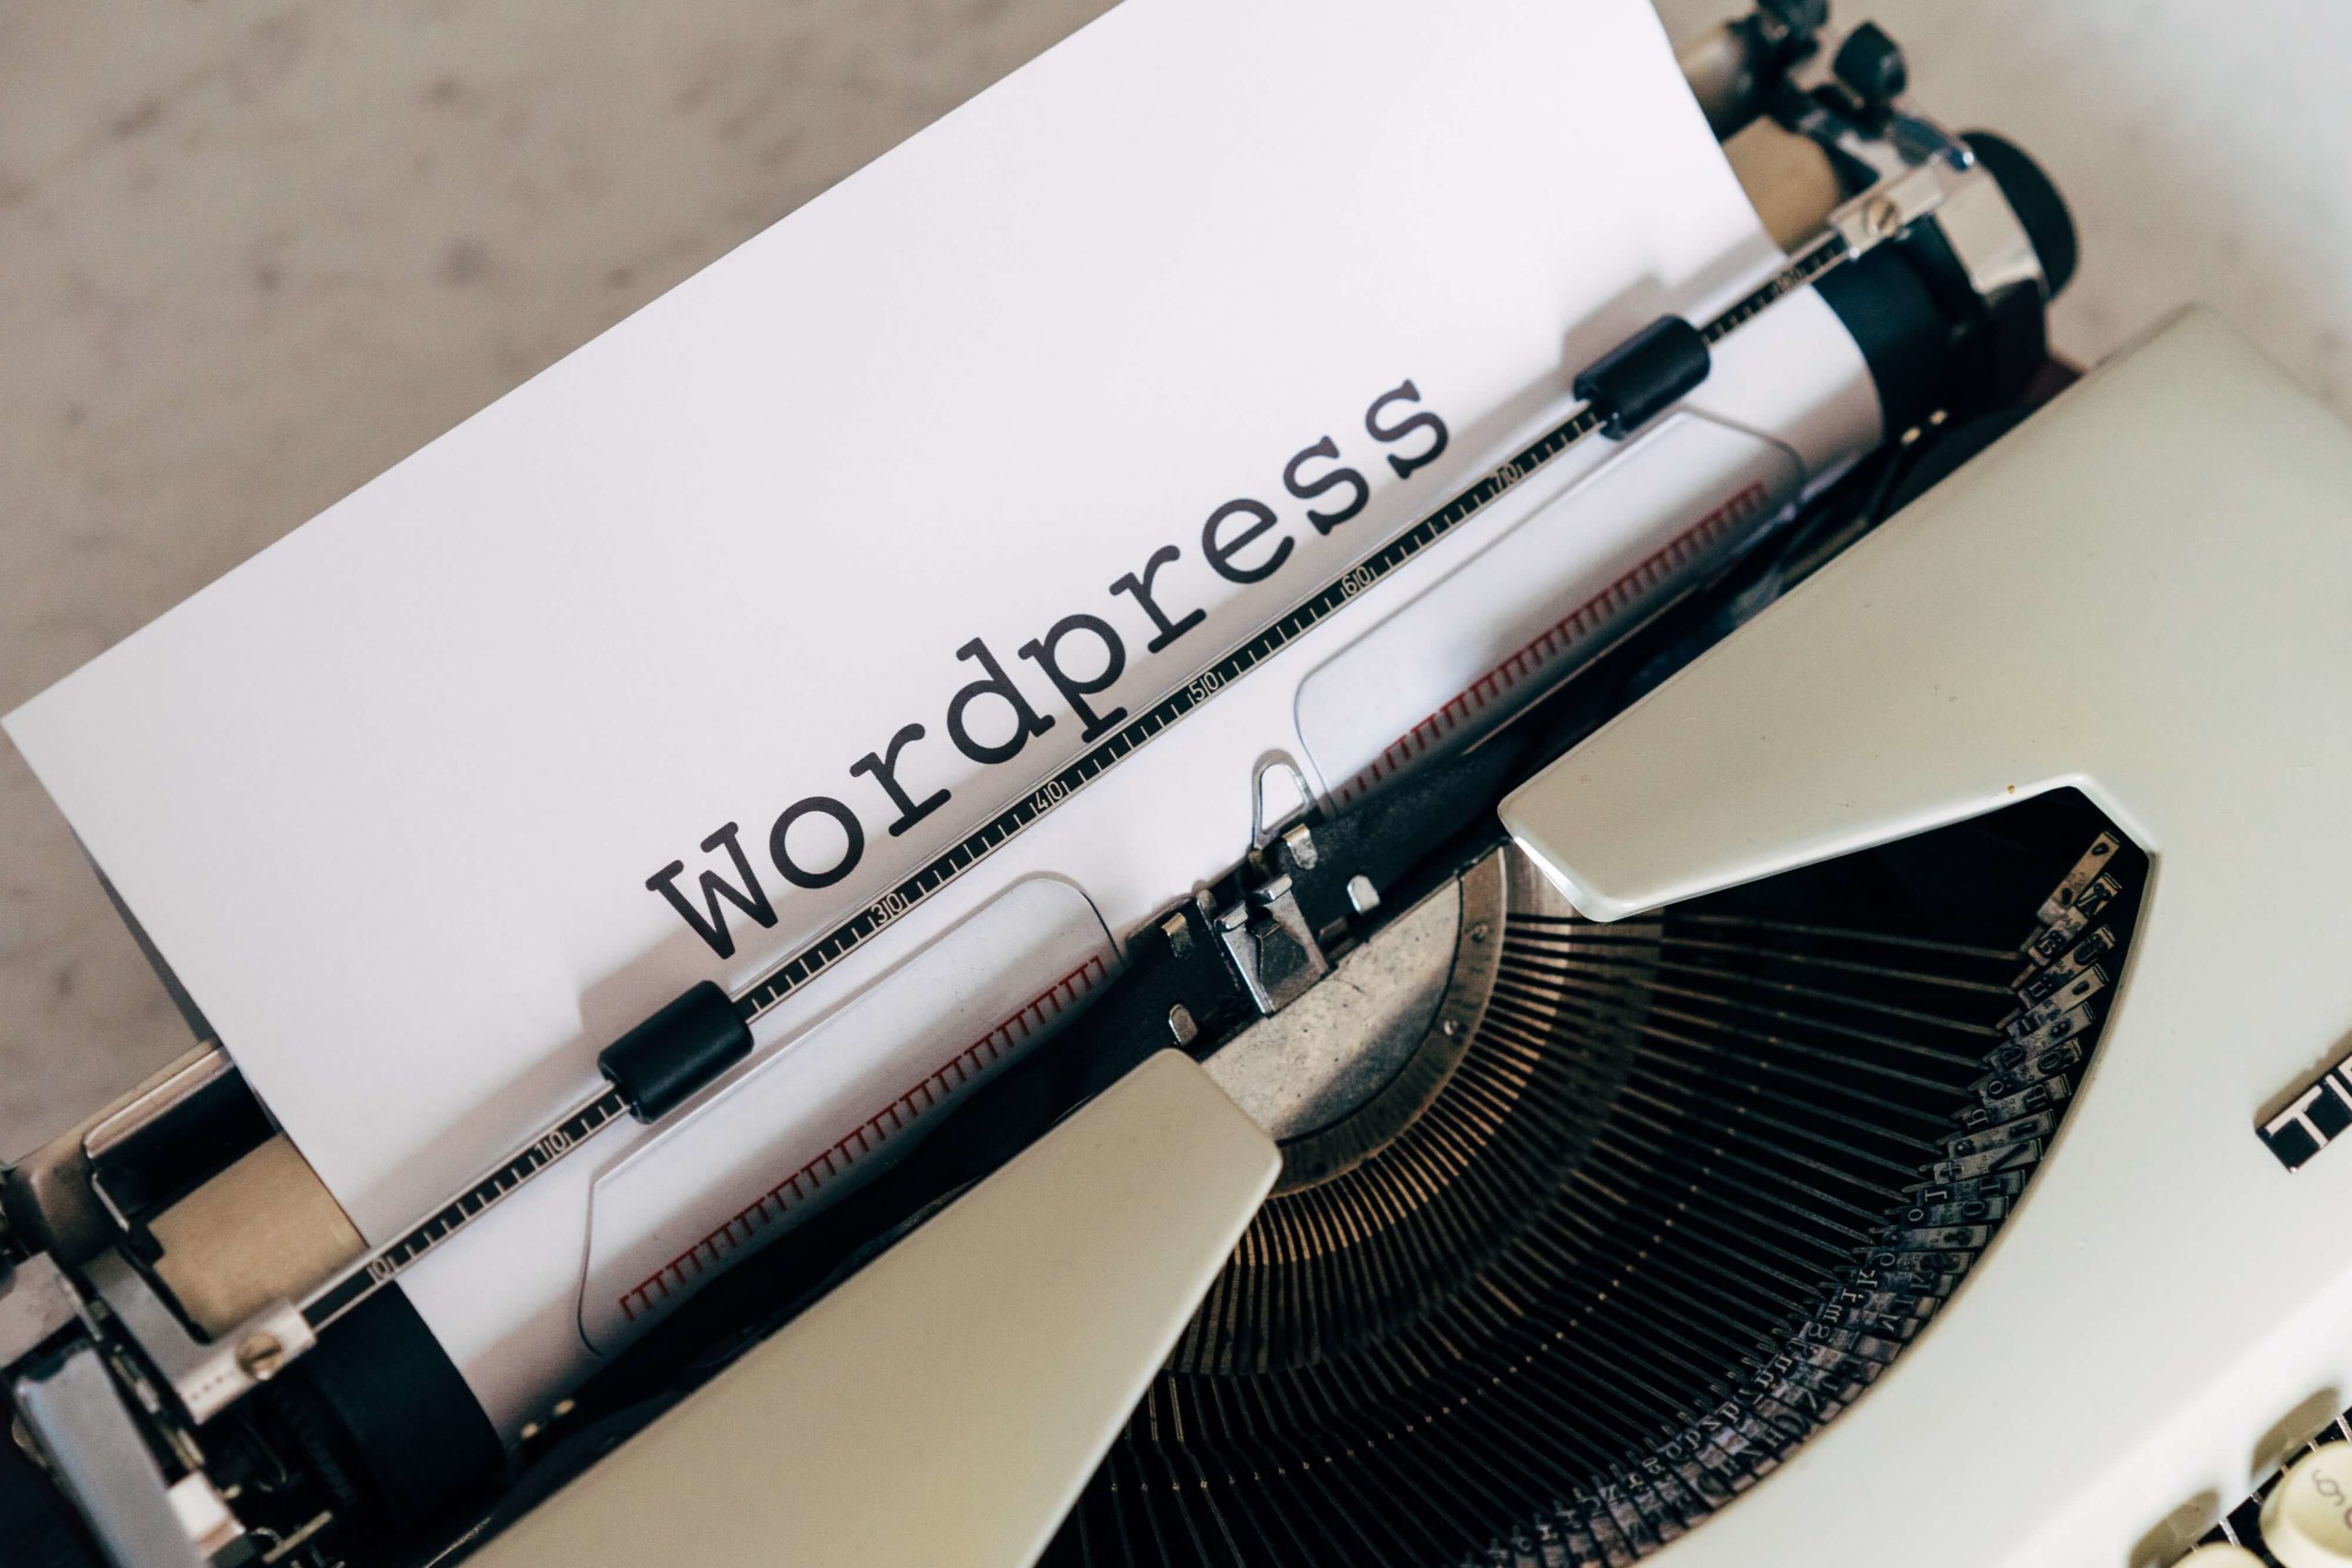 Blogging on Wordpress